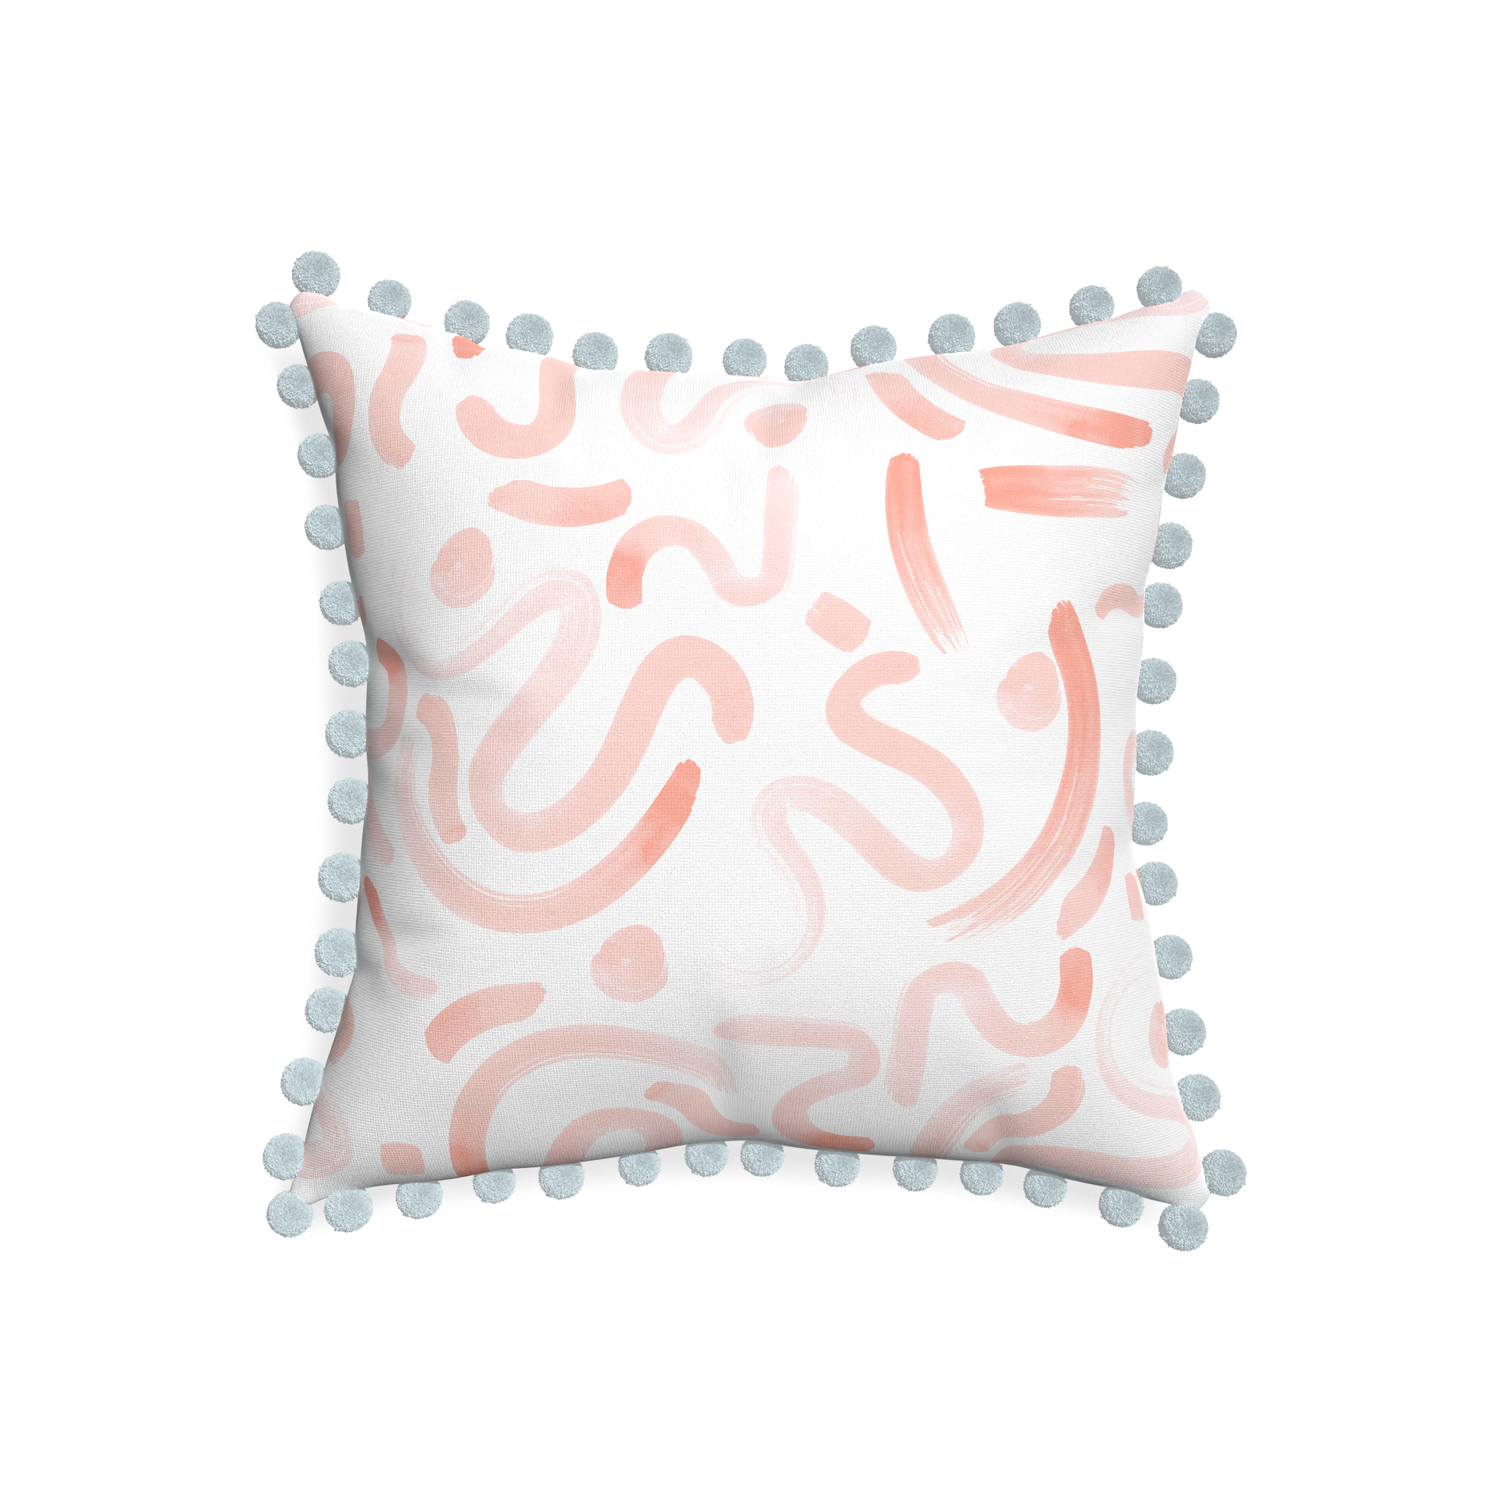 20-square hockney pink custom pillow with powder pom pom on white background